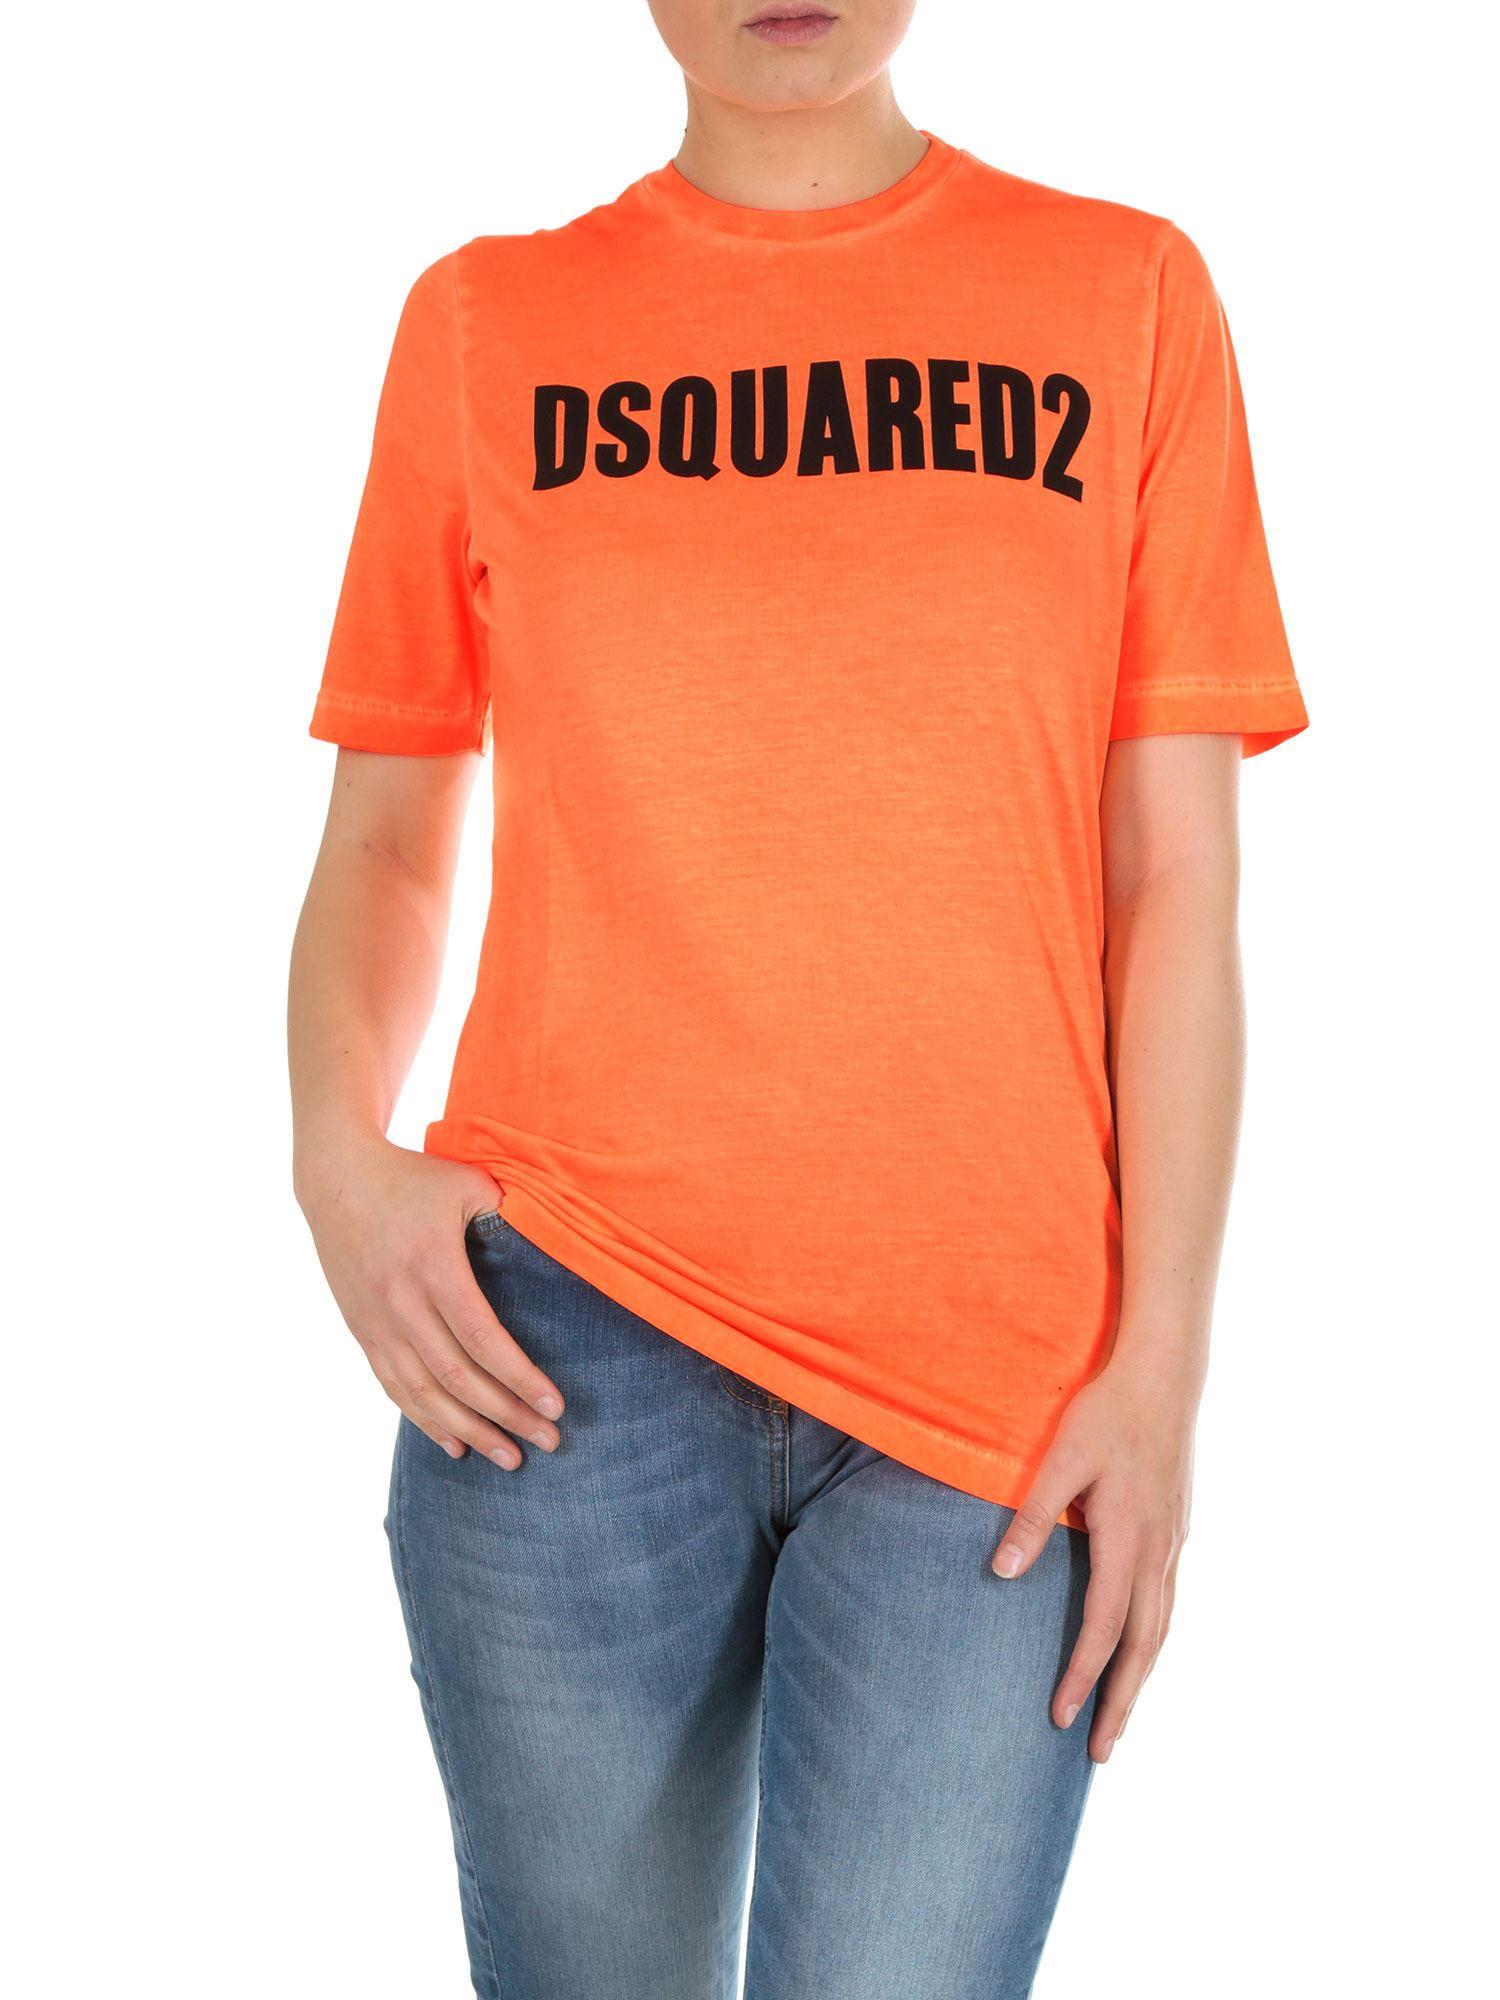 dsquared2 orange shirt